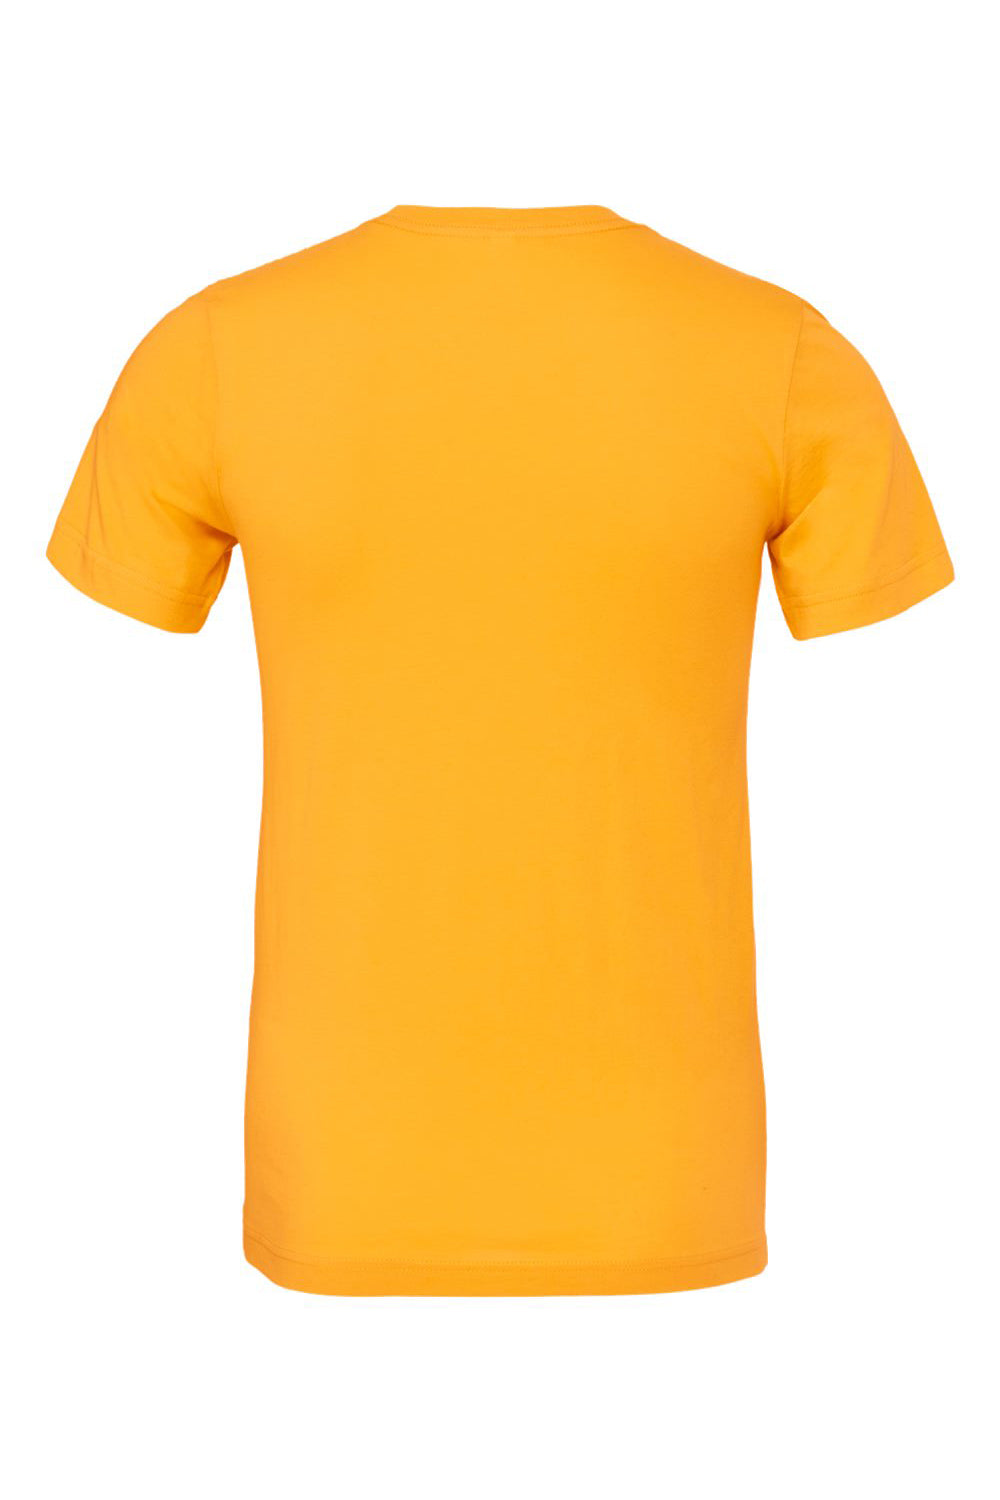 Bella + Canvas BC3001/3001C Mens Jersey Short Sleeve Crewneck T-Shirt Gold Flat Back